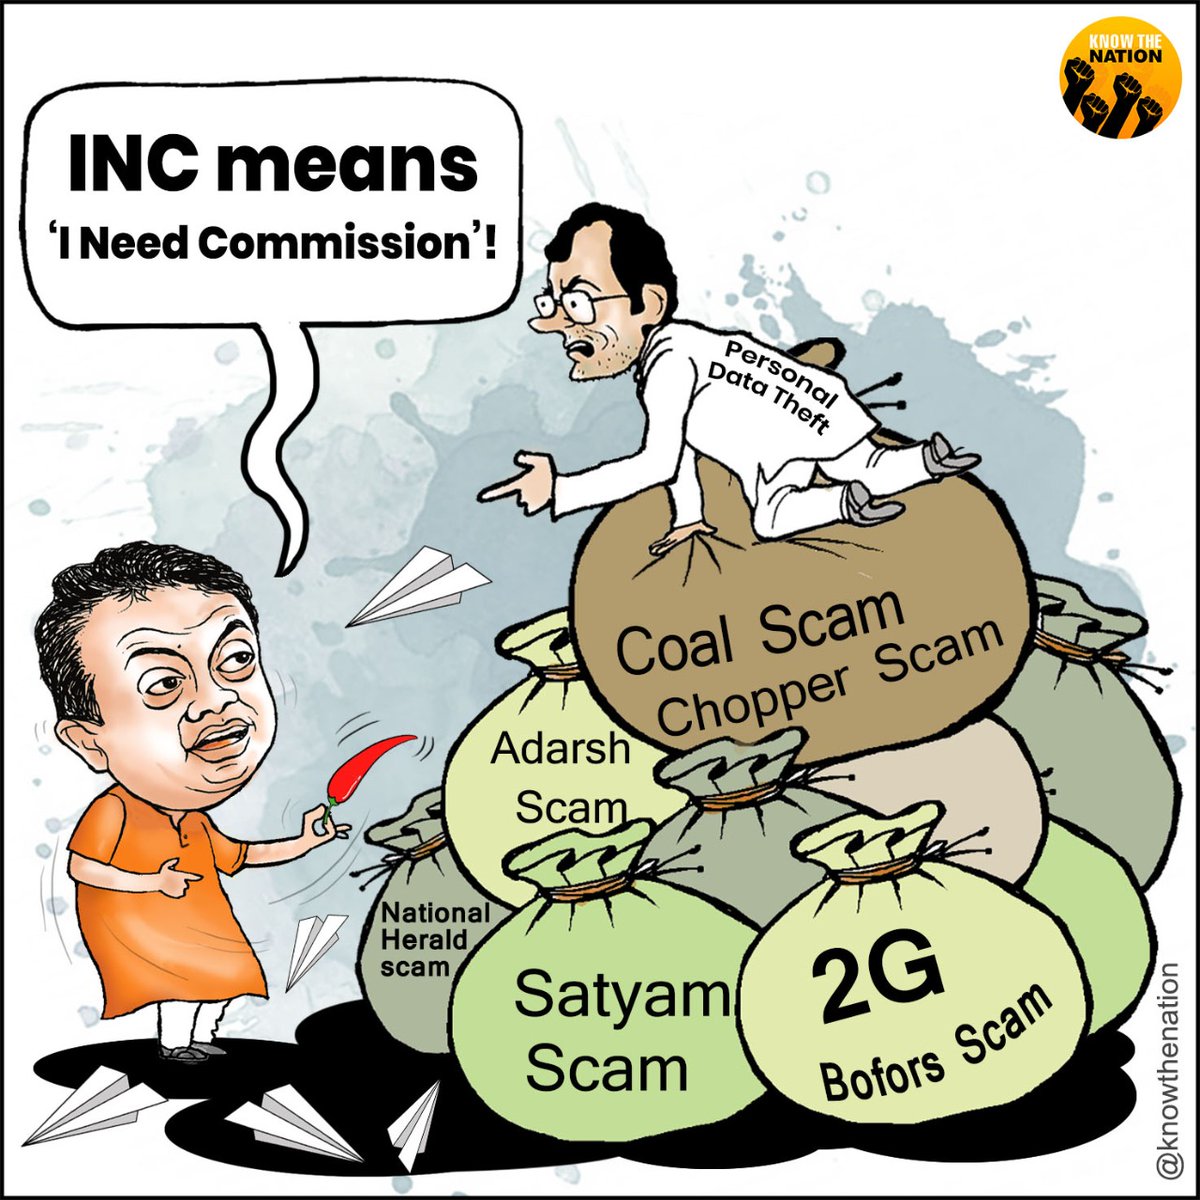 INC = I Need Commission

#CongressMukTBharat #RafaleScam #RafaleDeal